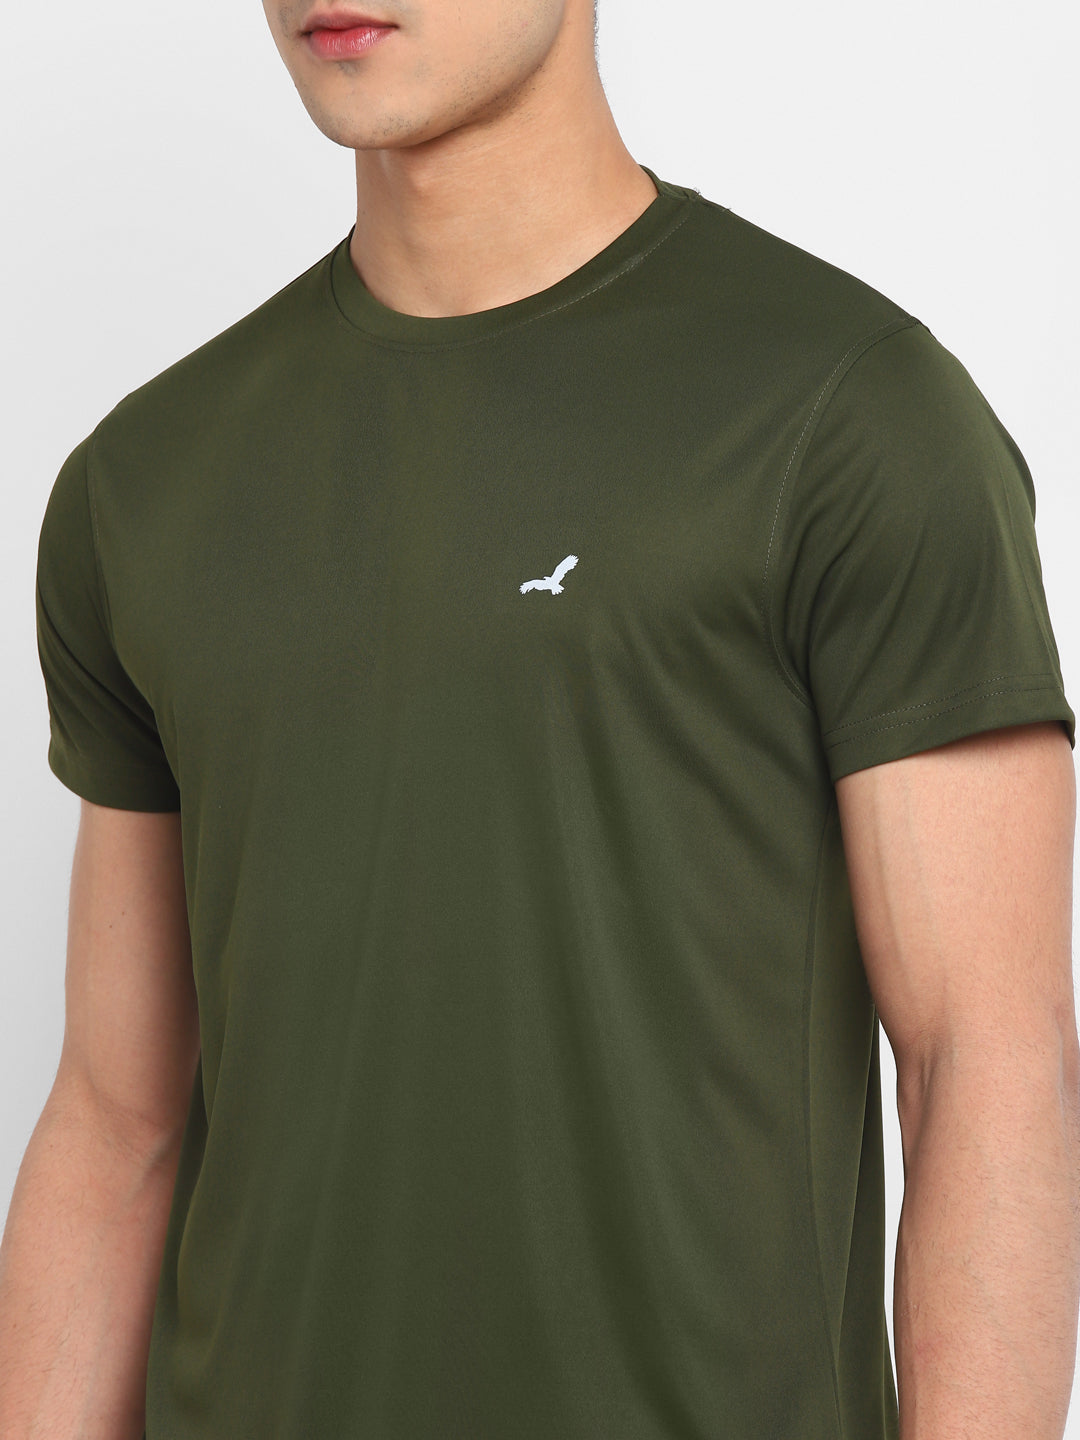 Premium Basics Kooltex Round Neck Sports T-Shirts for Men Pack of 2 - Olive & Navy